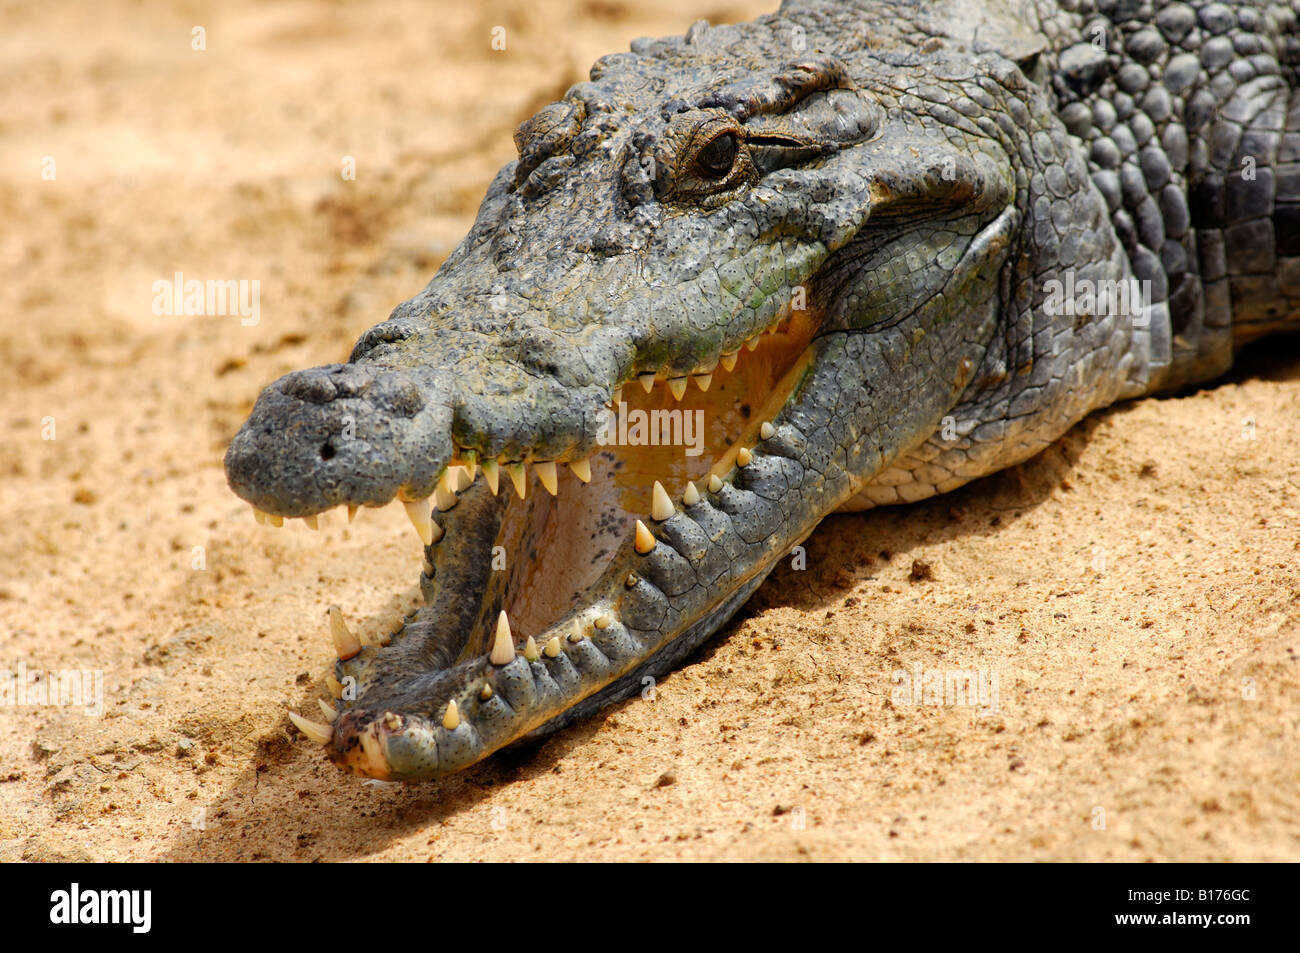 Nile Crocodile – Green – Himalayan